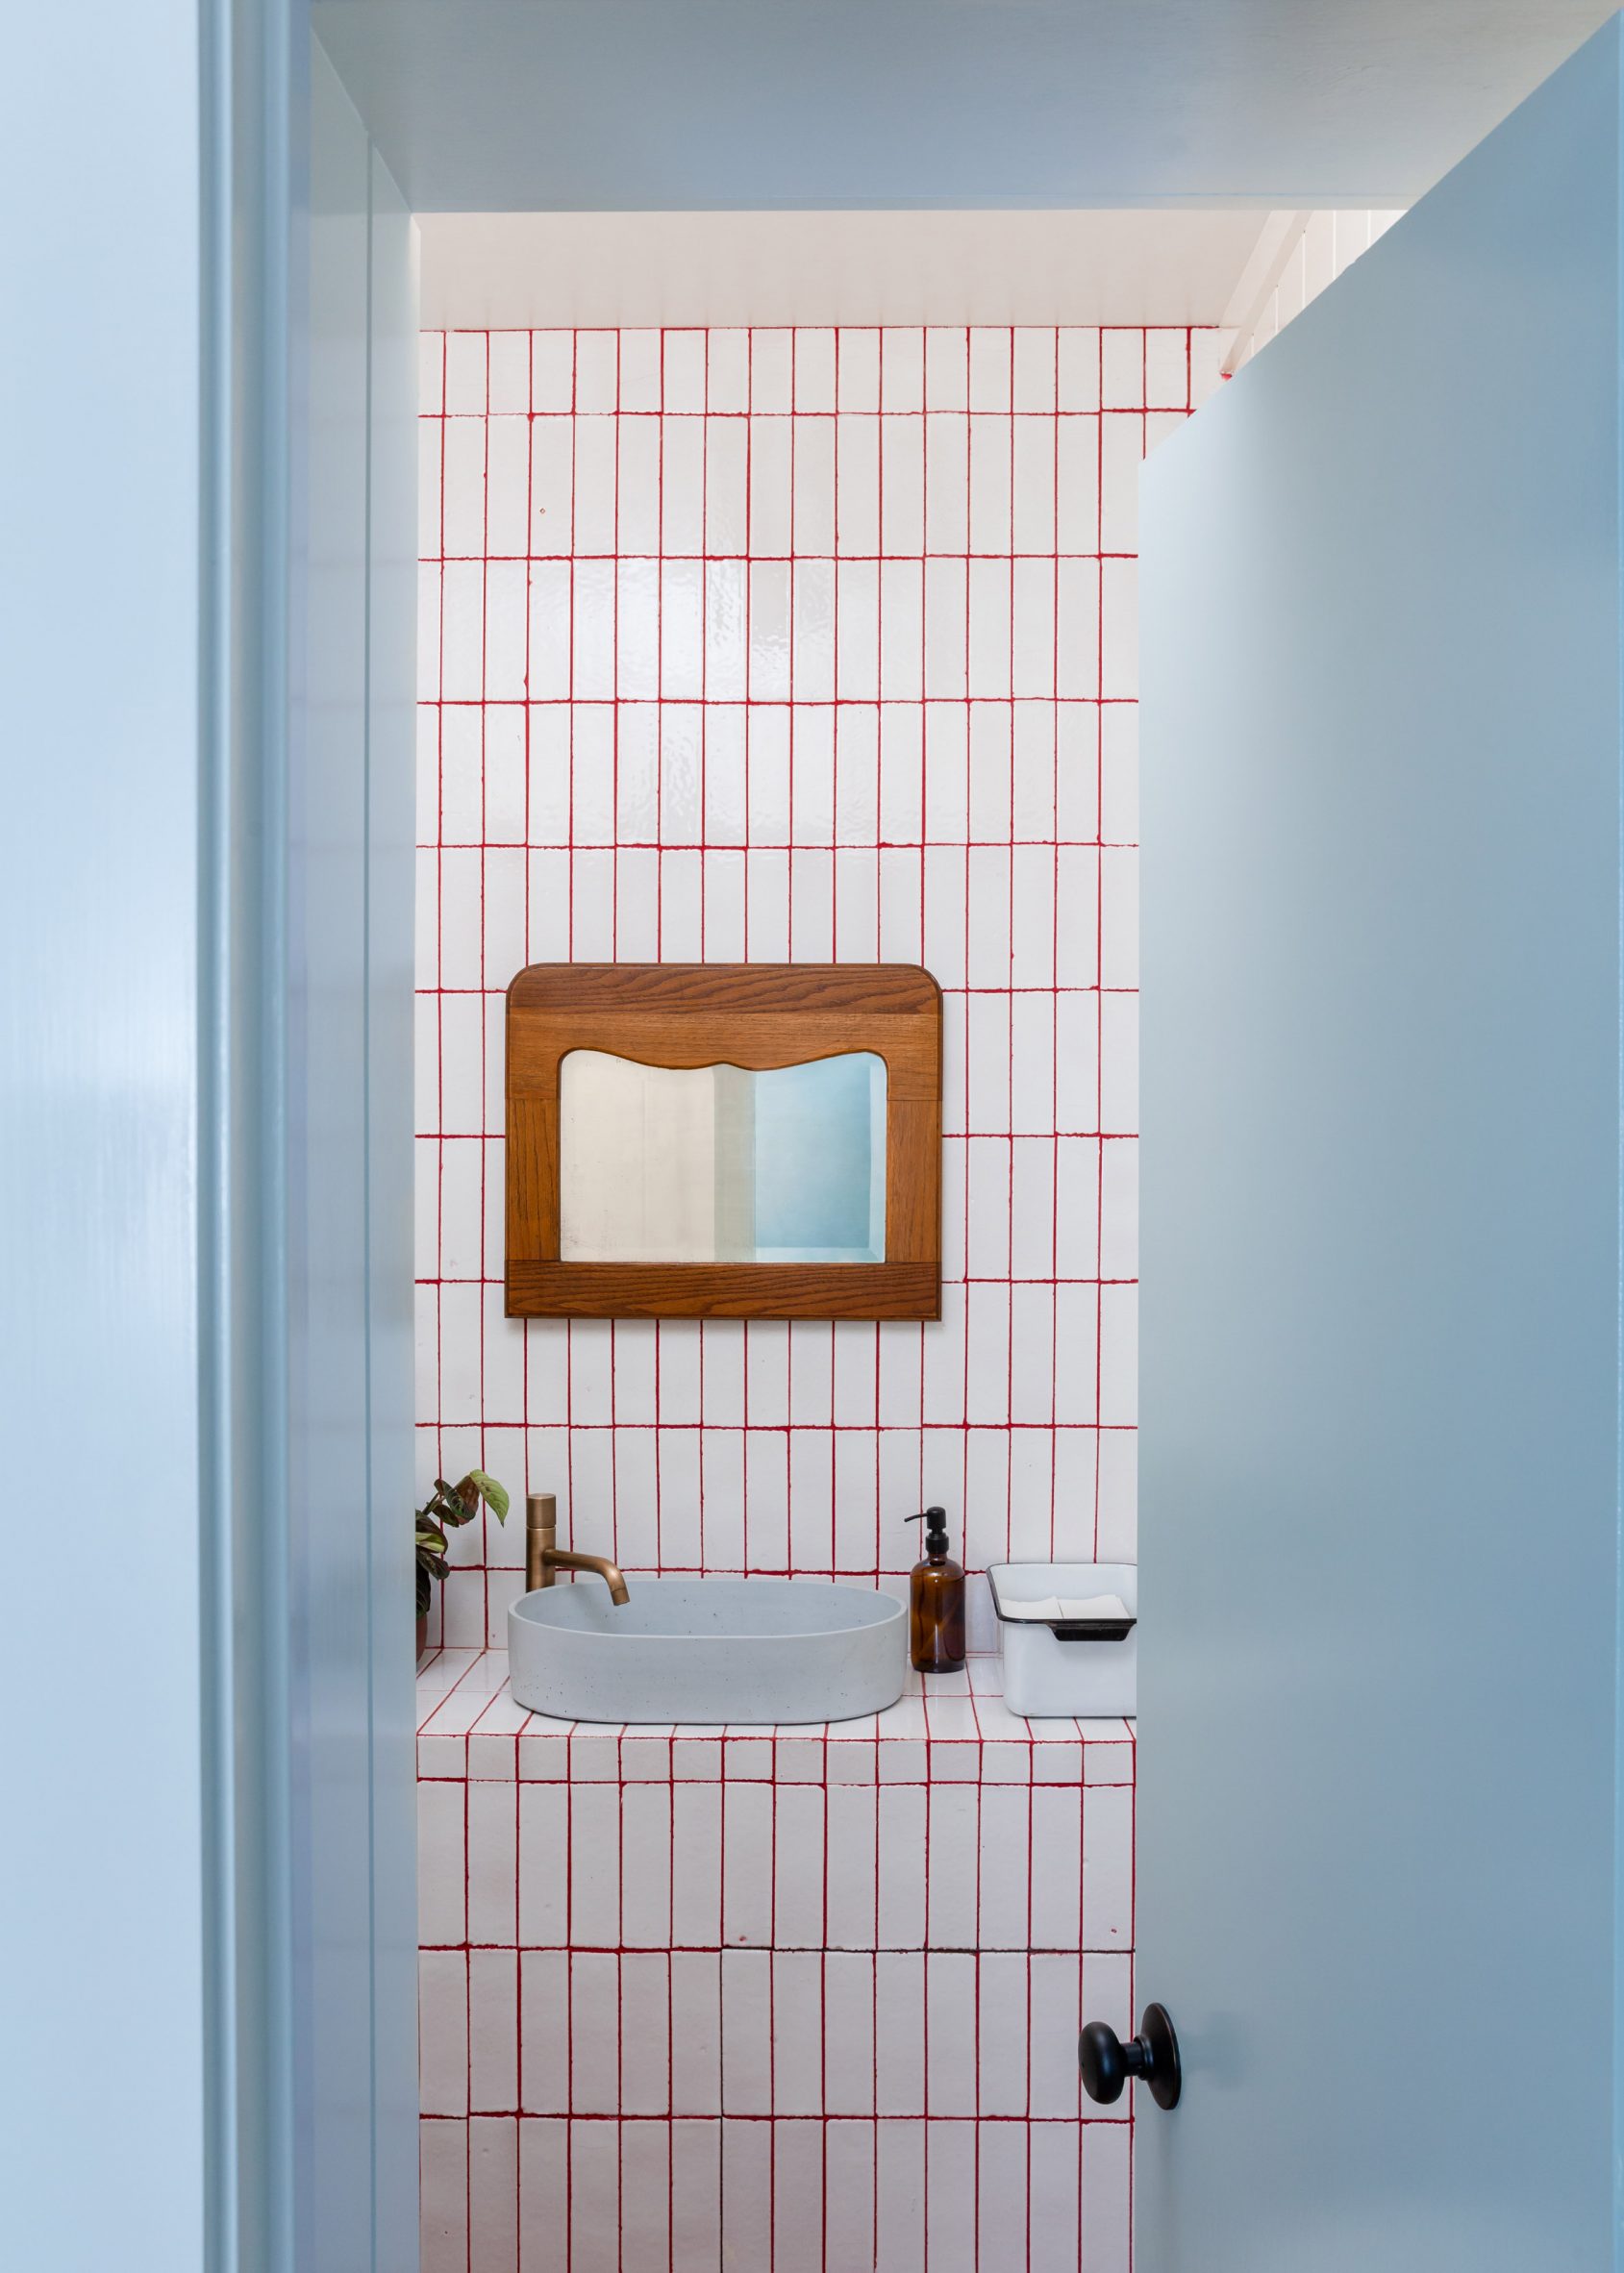 White-tiled bathroom viewed through powder-blue door frame